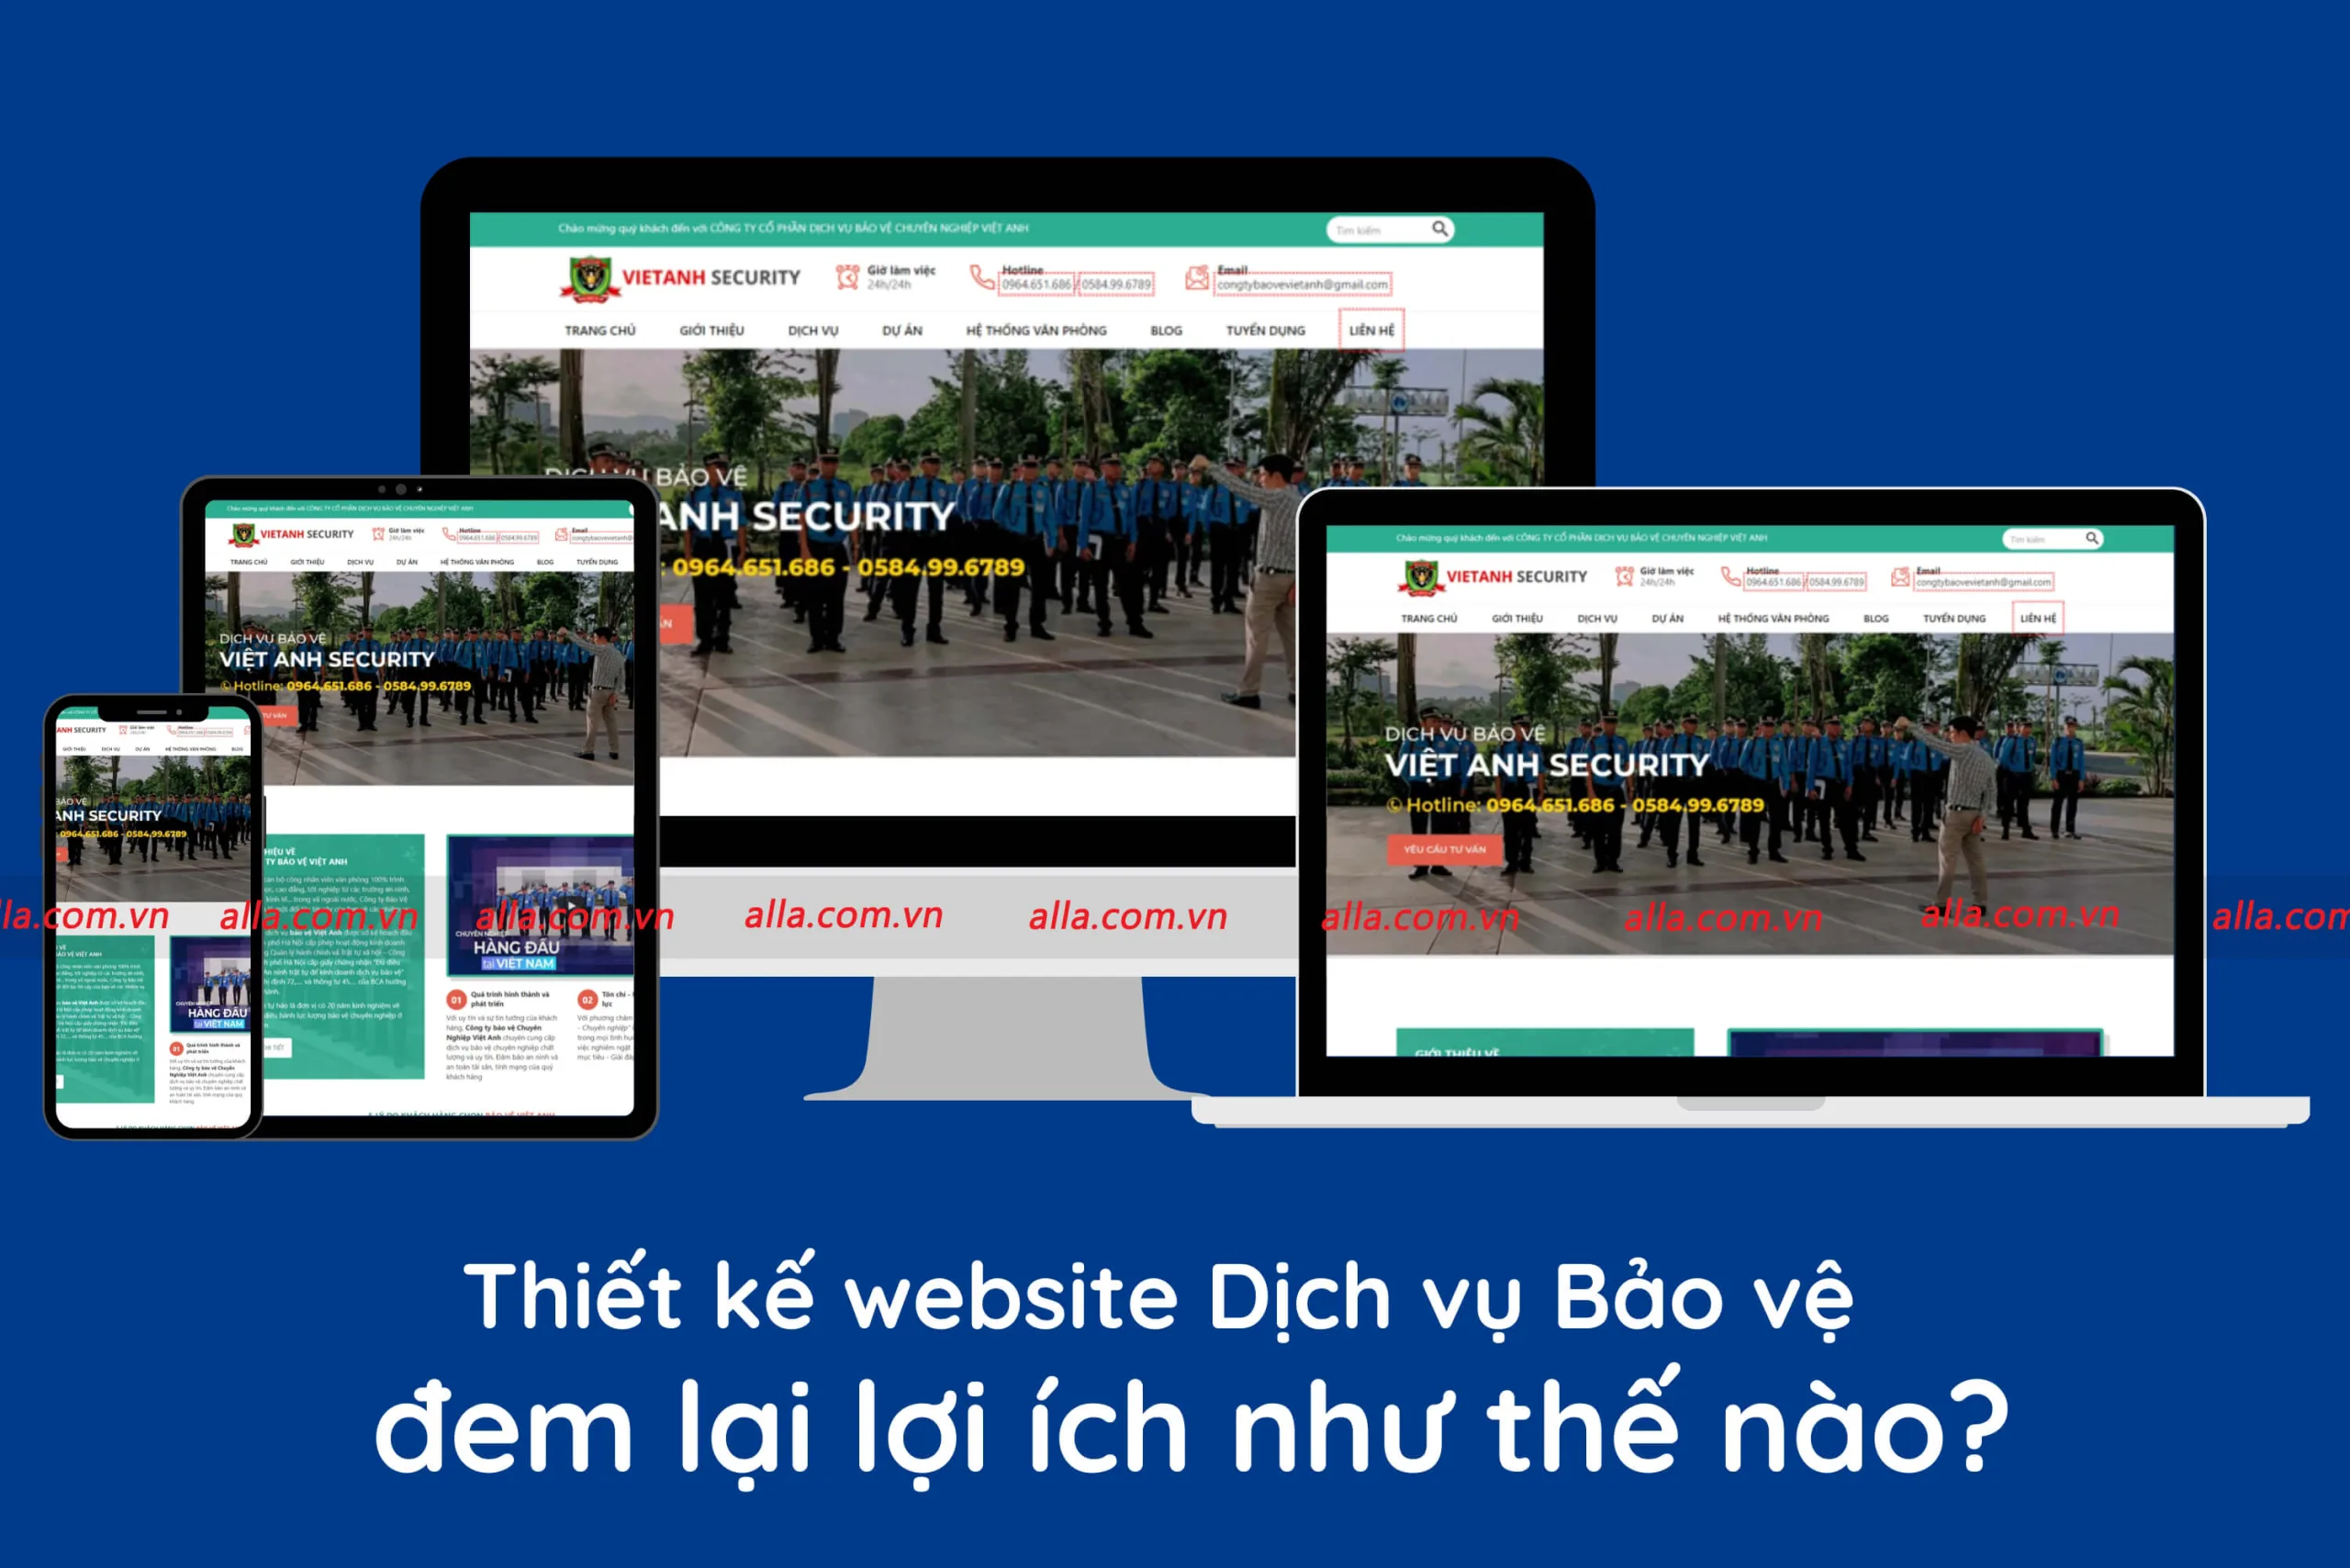 loi-ich-khi-thiet-ke-website-bao-ve